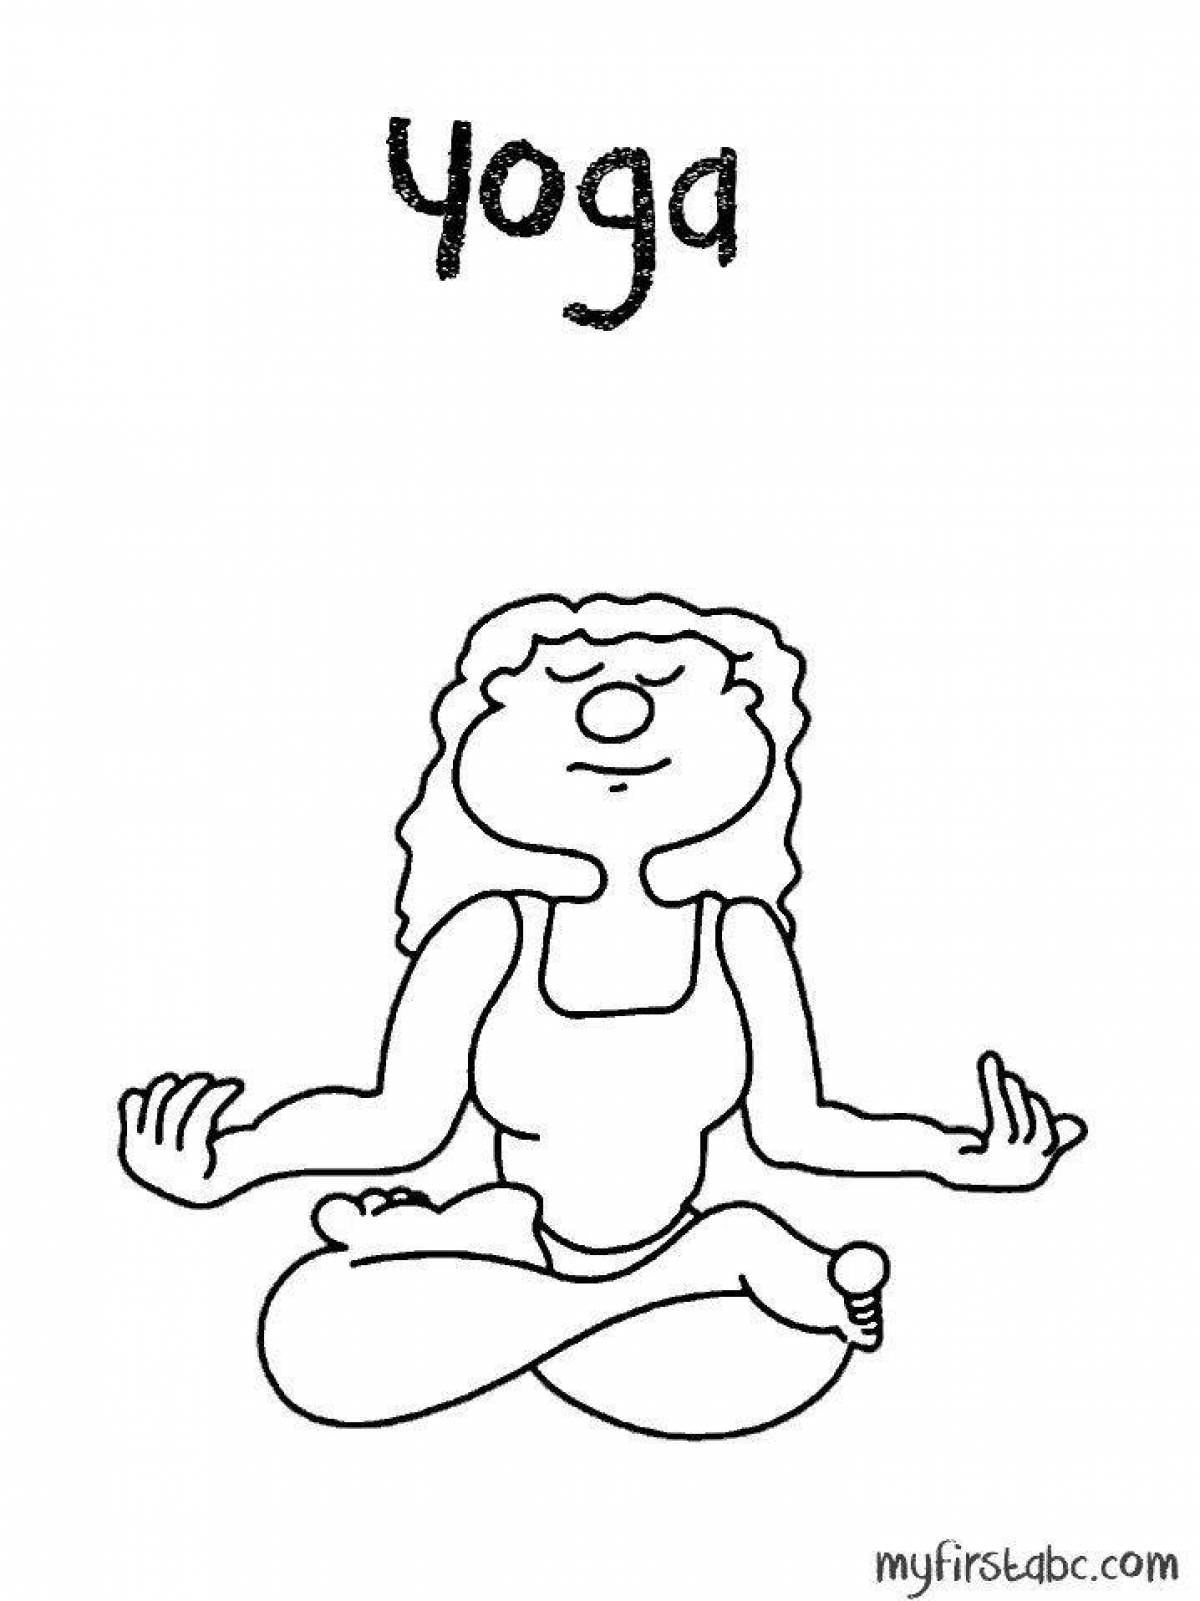 Live yoga coloring book